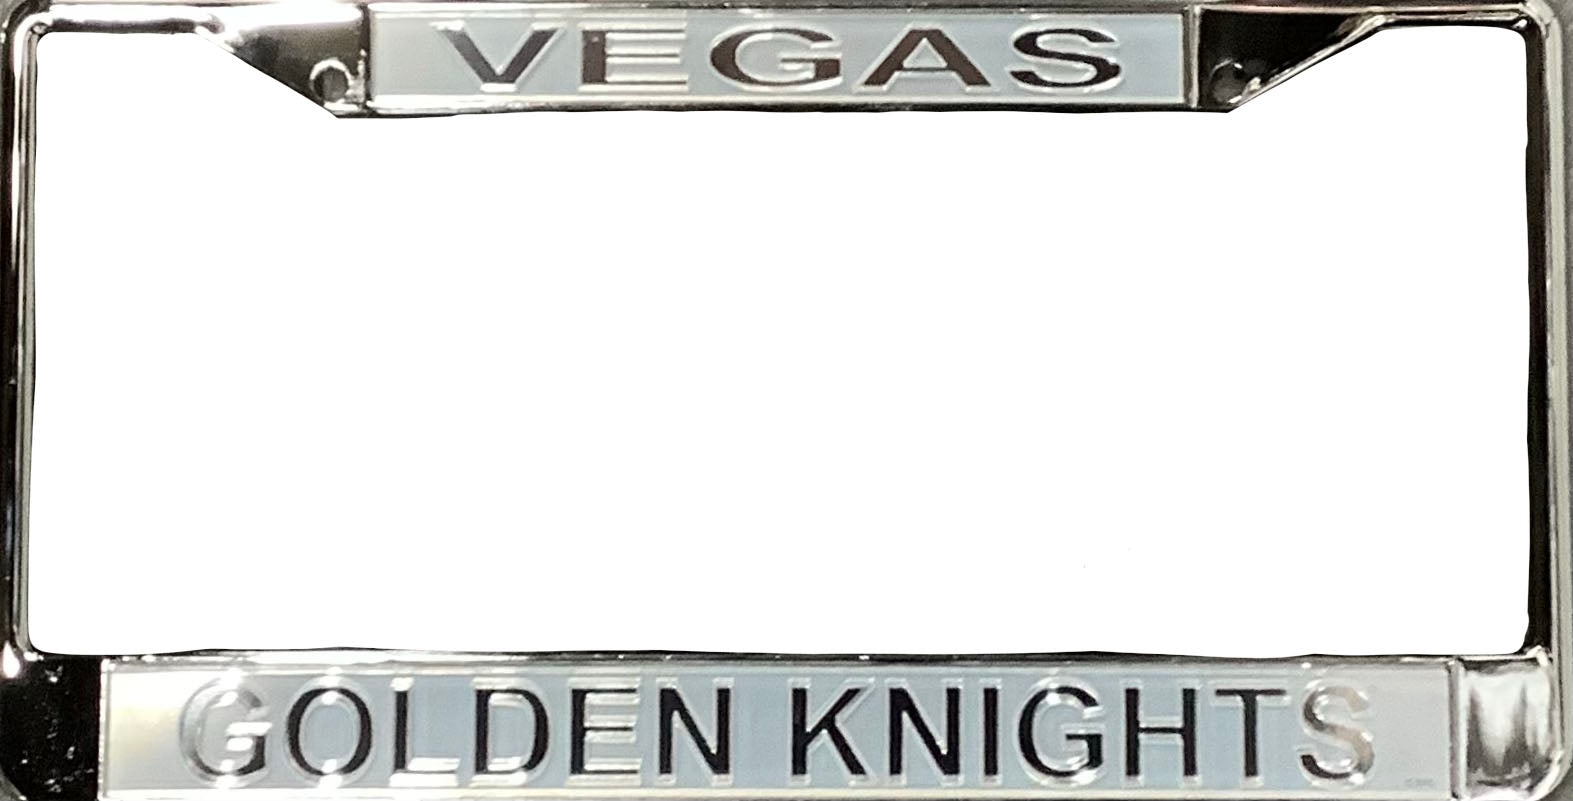 Vegas Golden Knights License Plate Frame - Silver Chrome